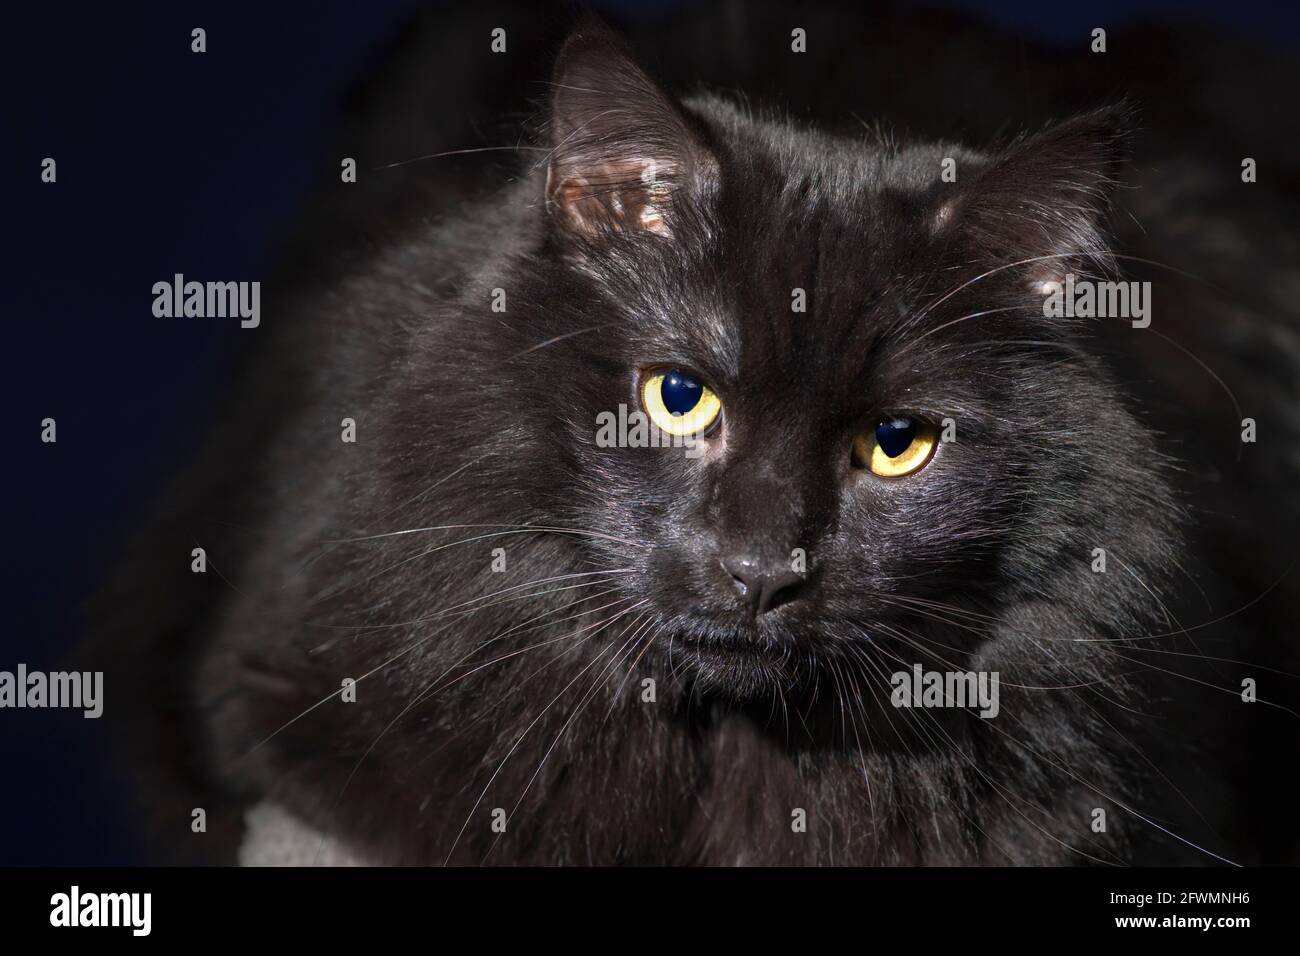 Adorable dulce primer plano retrato de un gato negro de pelo largo. Foto de stock